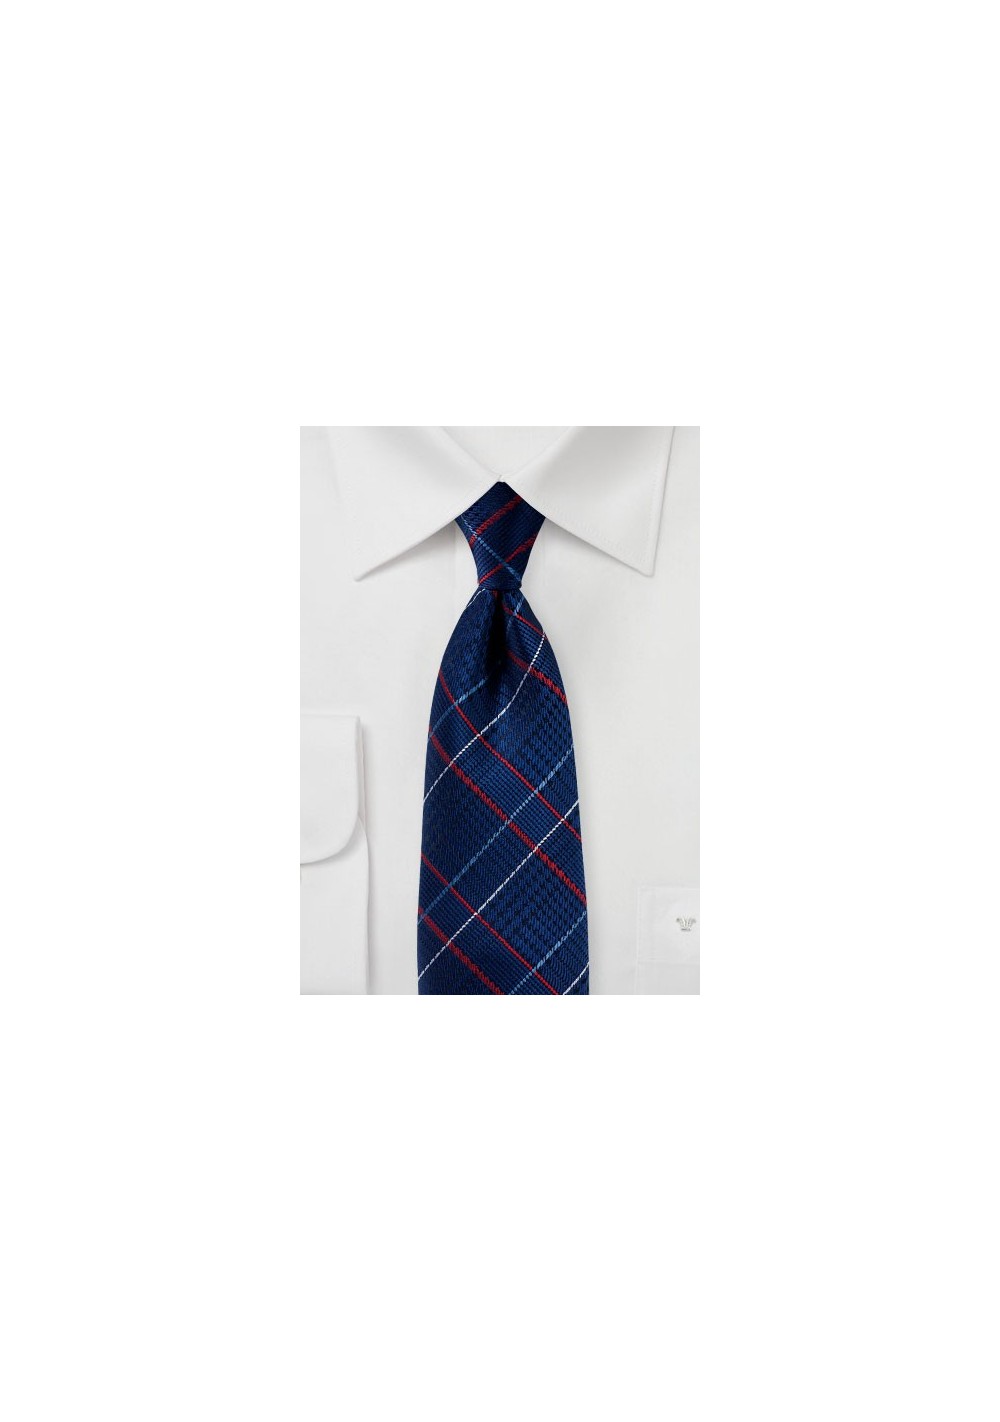 Sapphire Blue Glen Check Tie